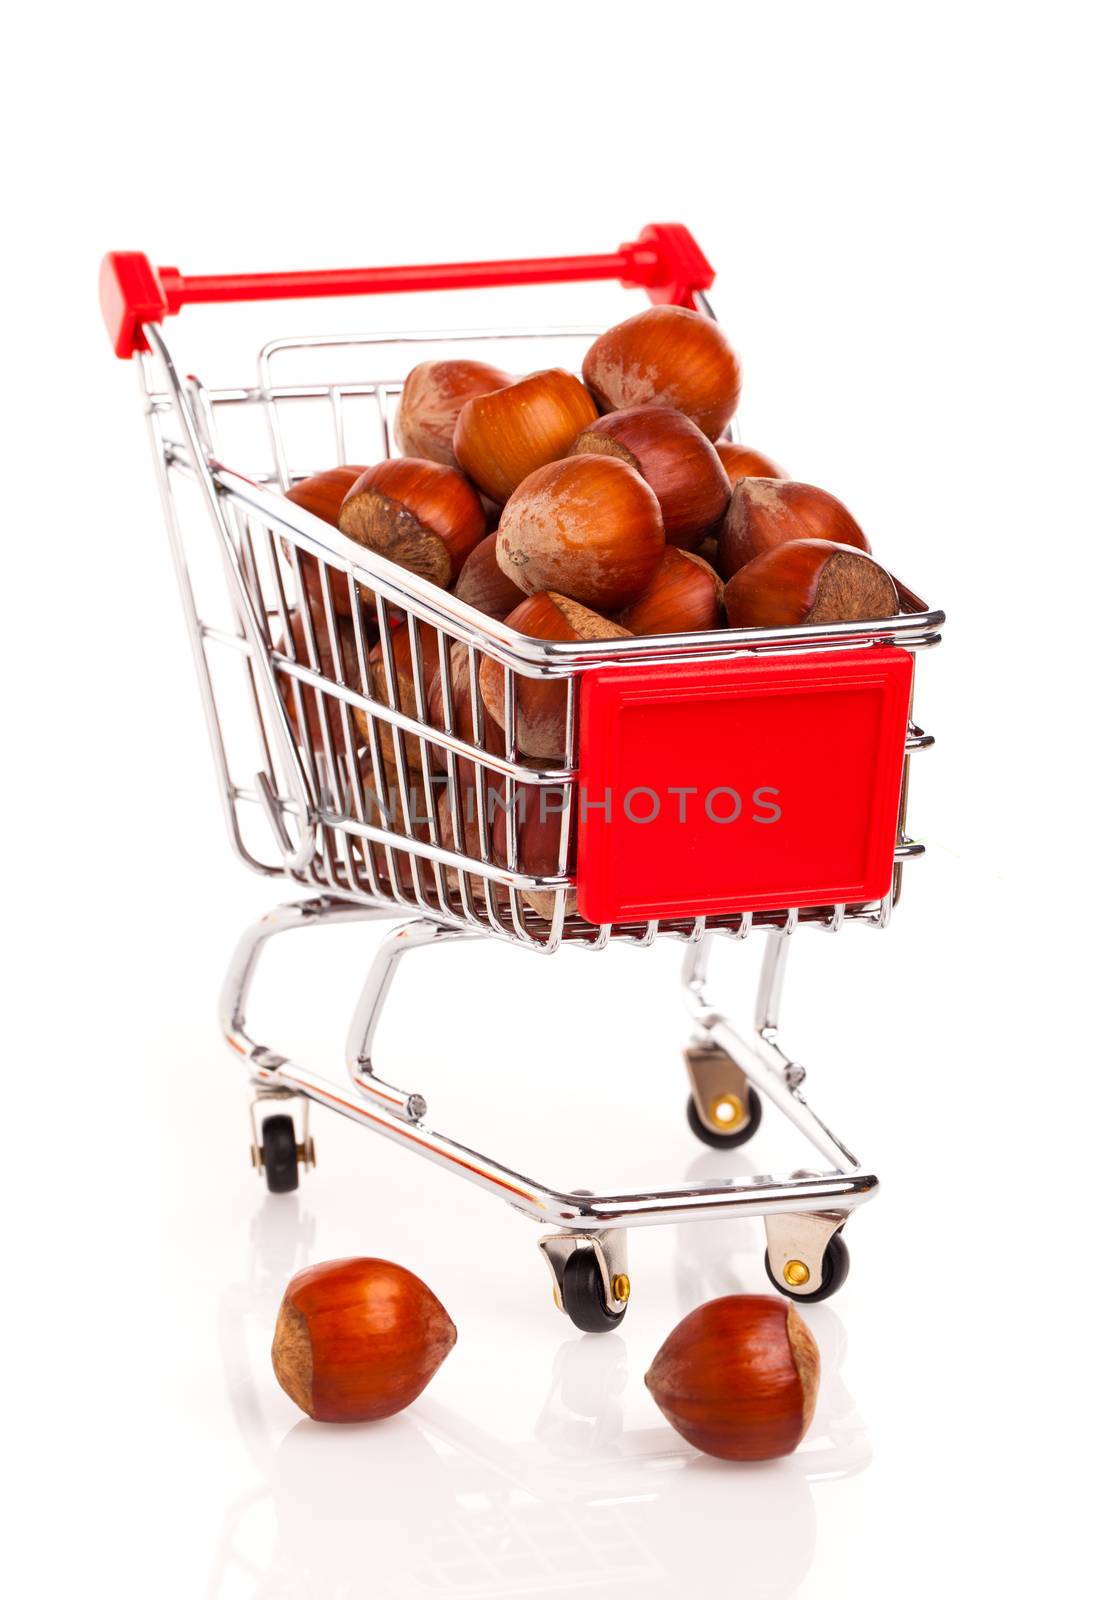 a Shopping cart full of hazelnut, on a white background by motorolka